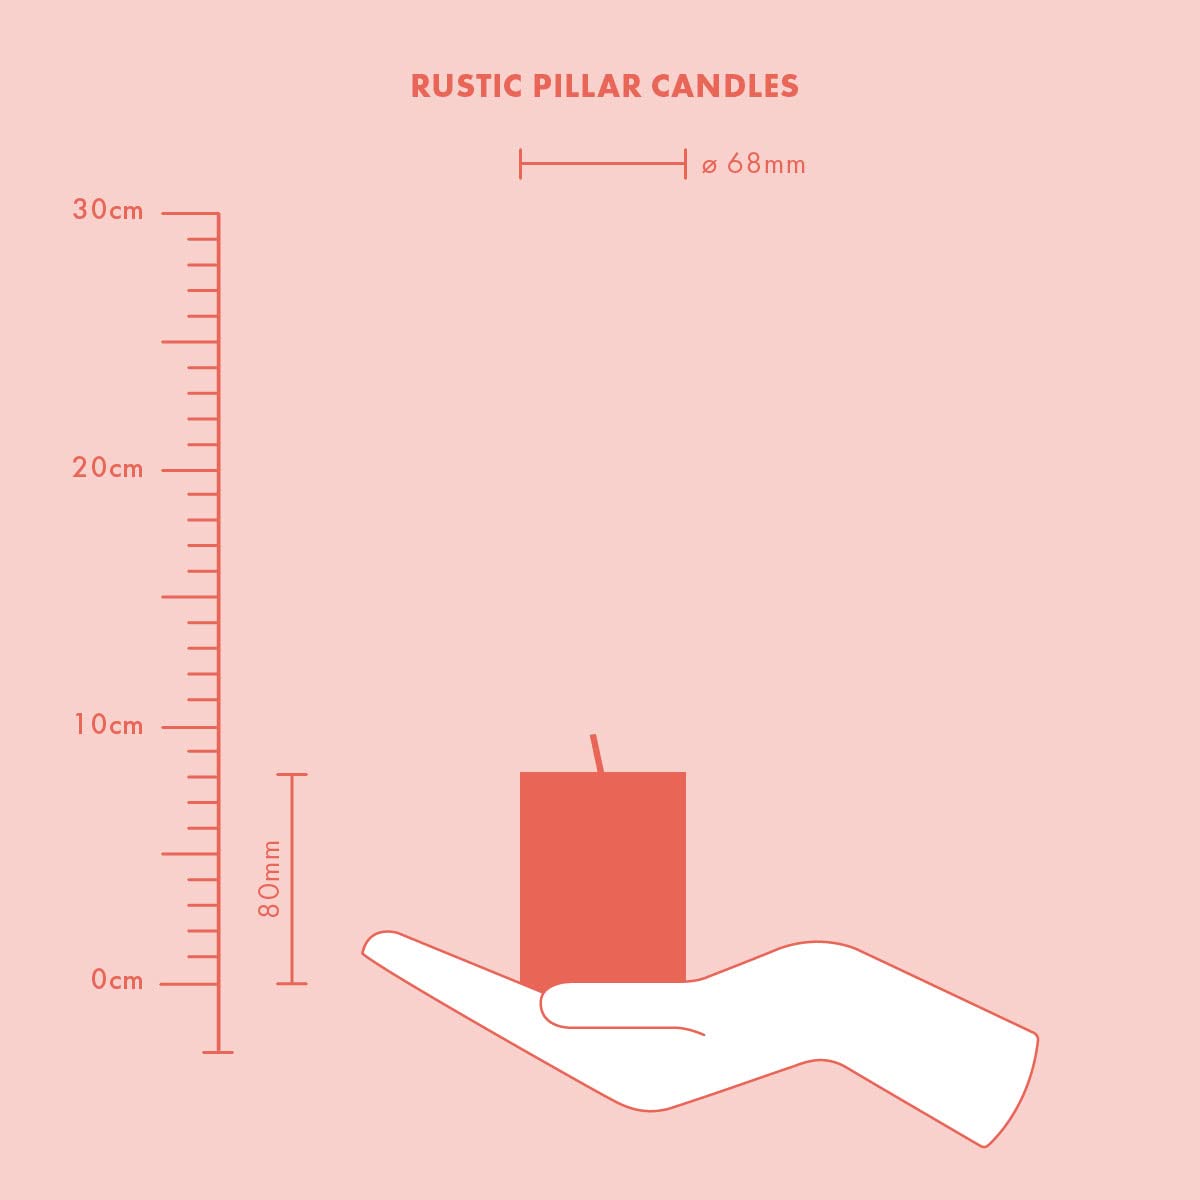 BOLSIUS Rustic Pillar Candle (Pack 4)  - Very Good